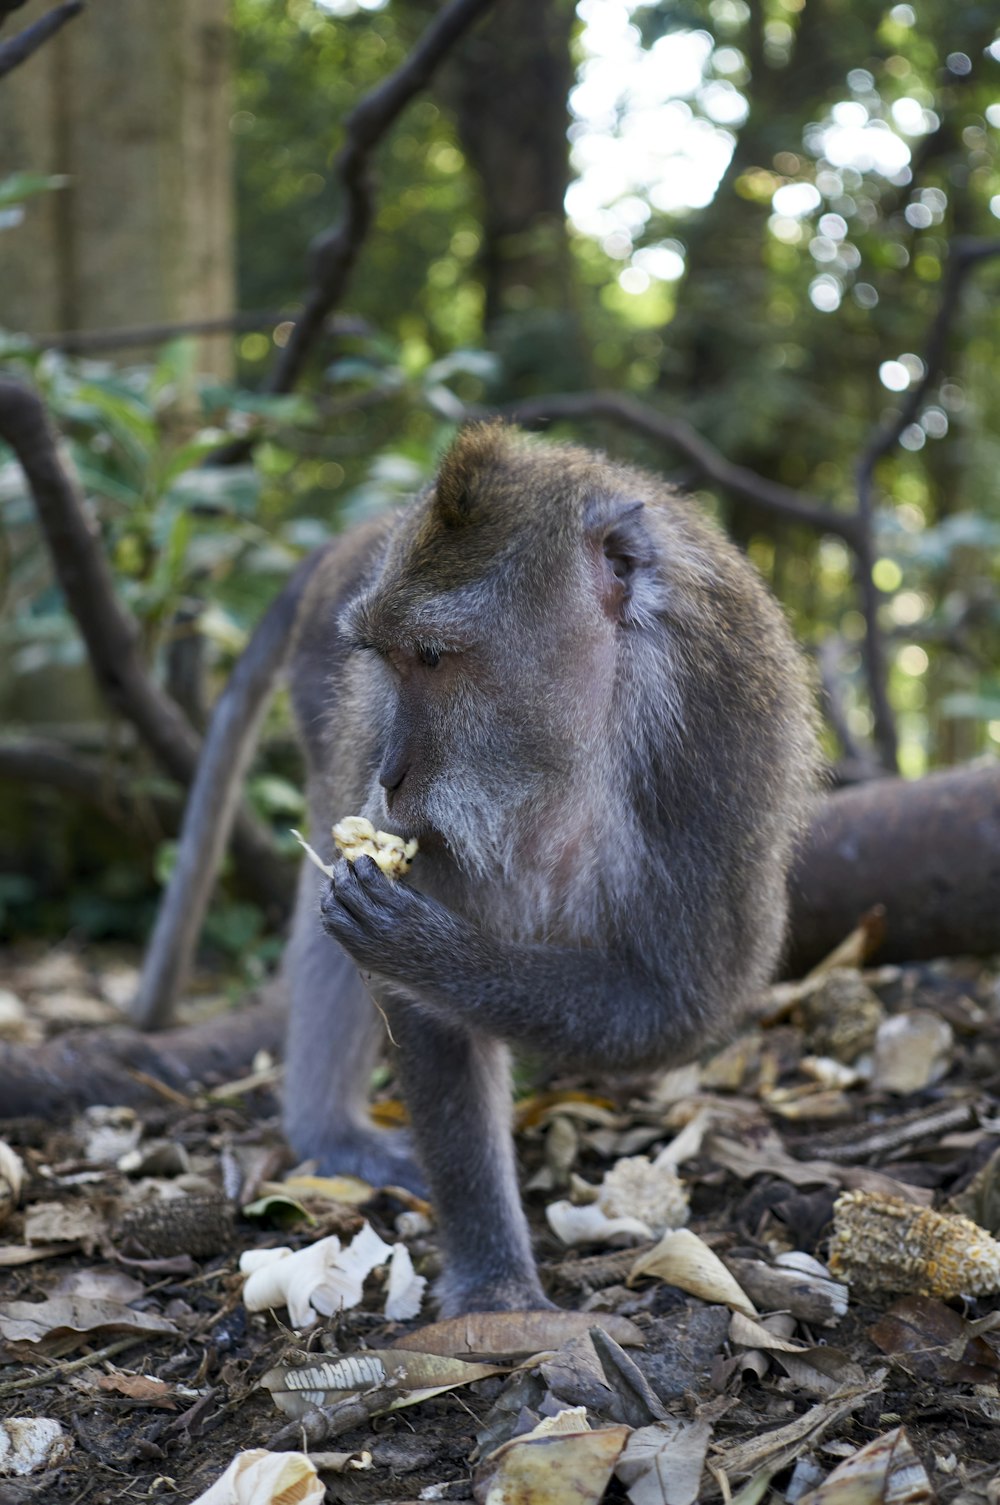 a monkey sitting on the ground eating something